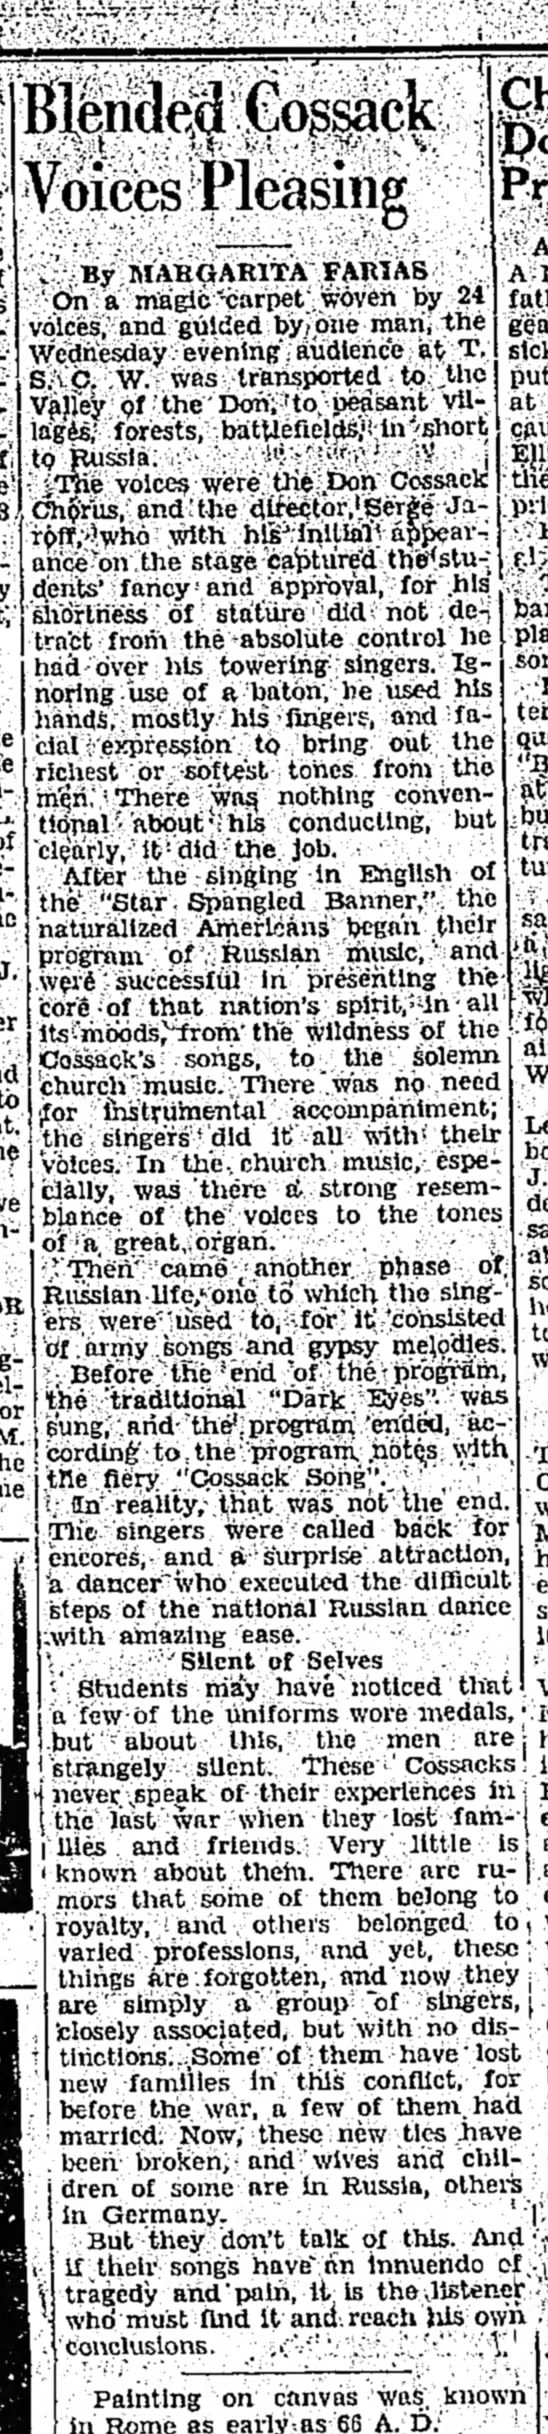 Jaroff choir in Denton January 17 1945-interesting details--TWU concert